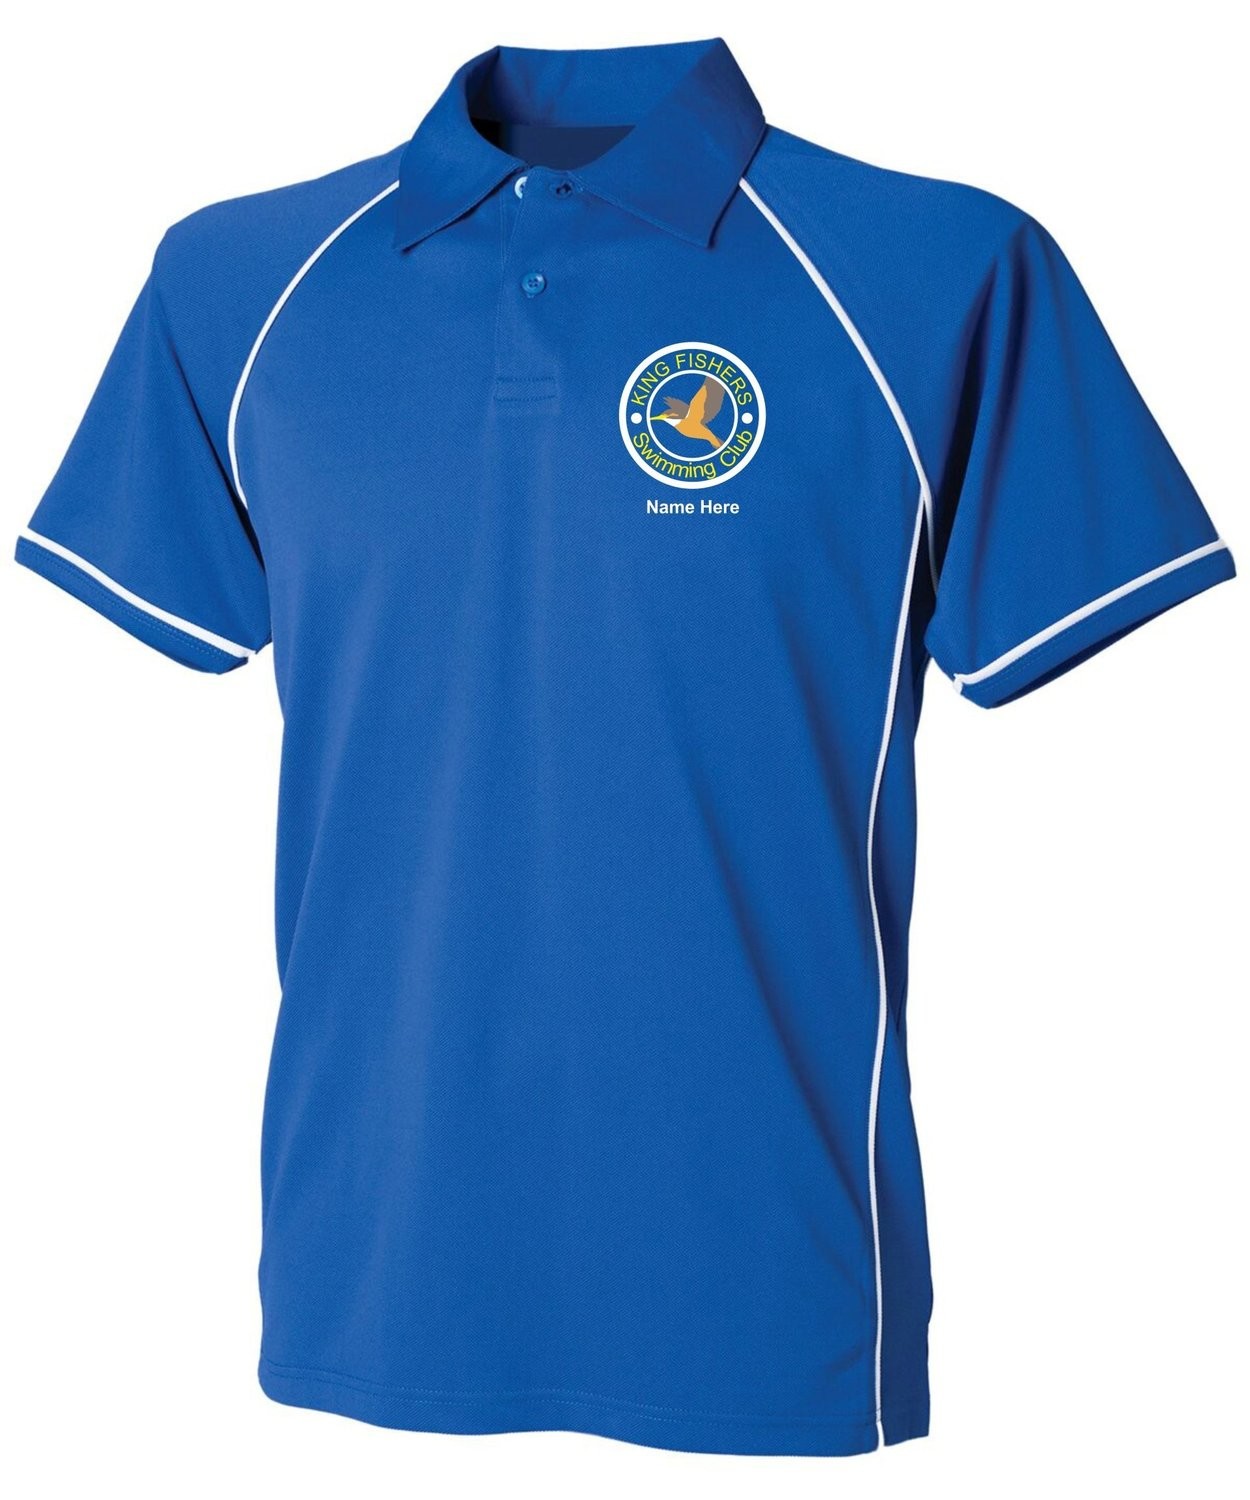 Kids' Kingfishers Swimming Club Cool Tec Polo Shirt